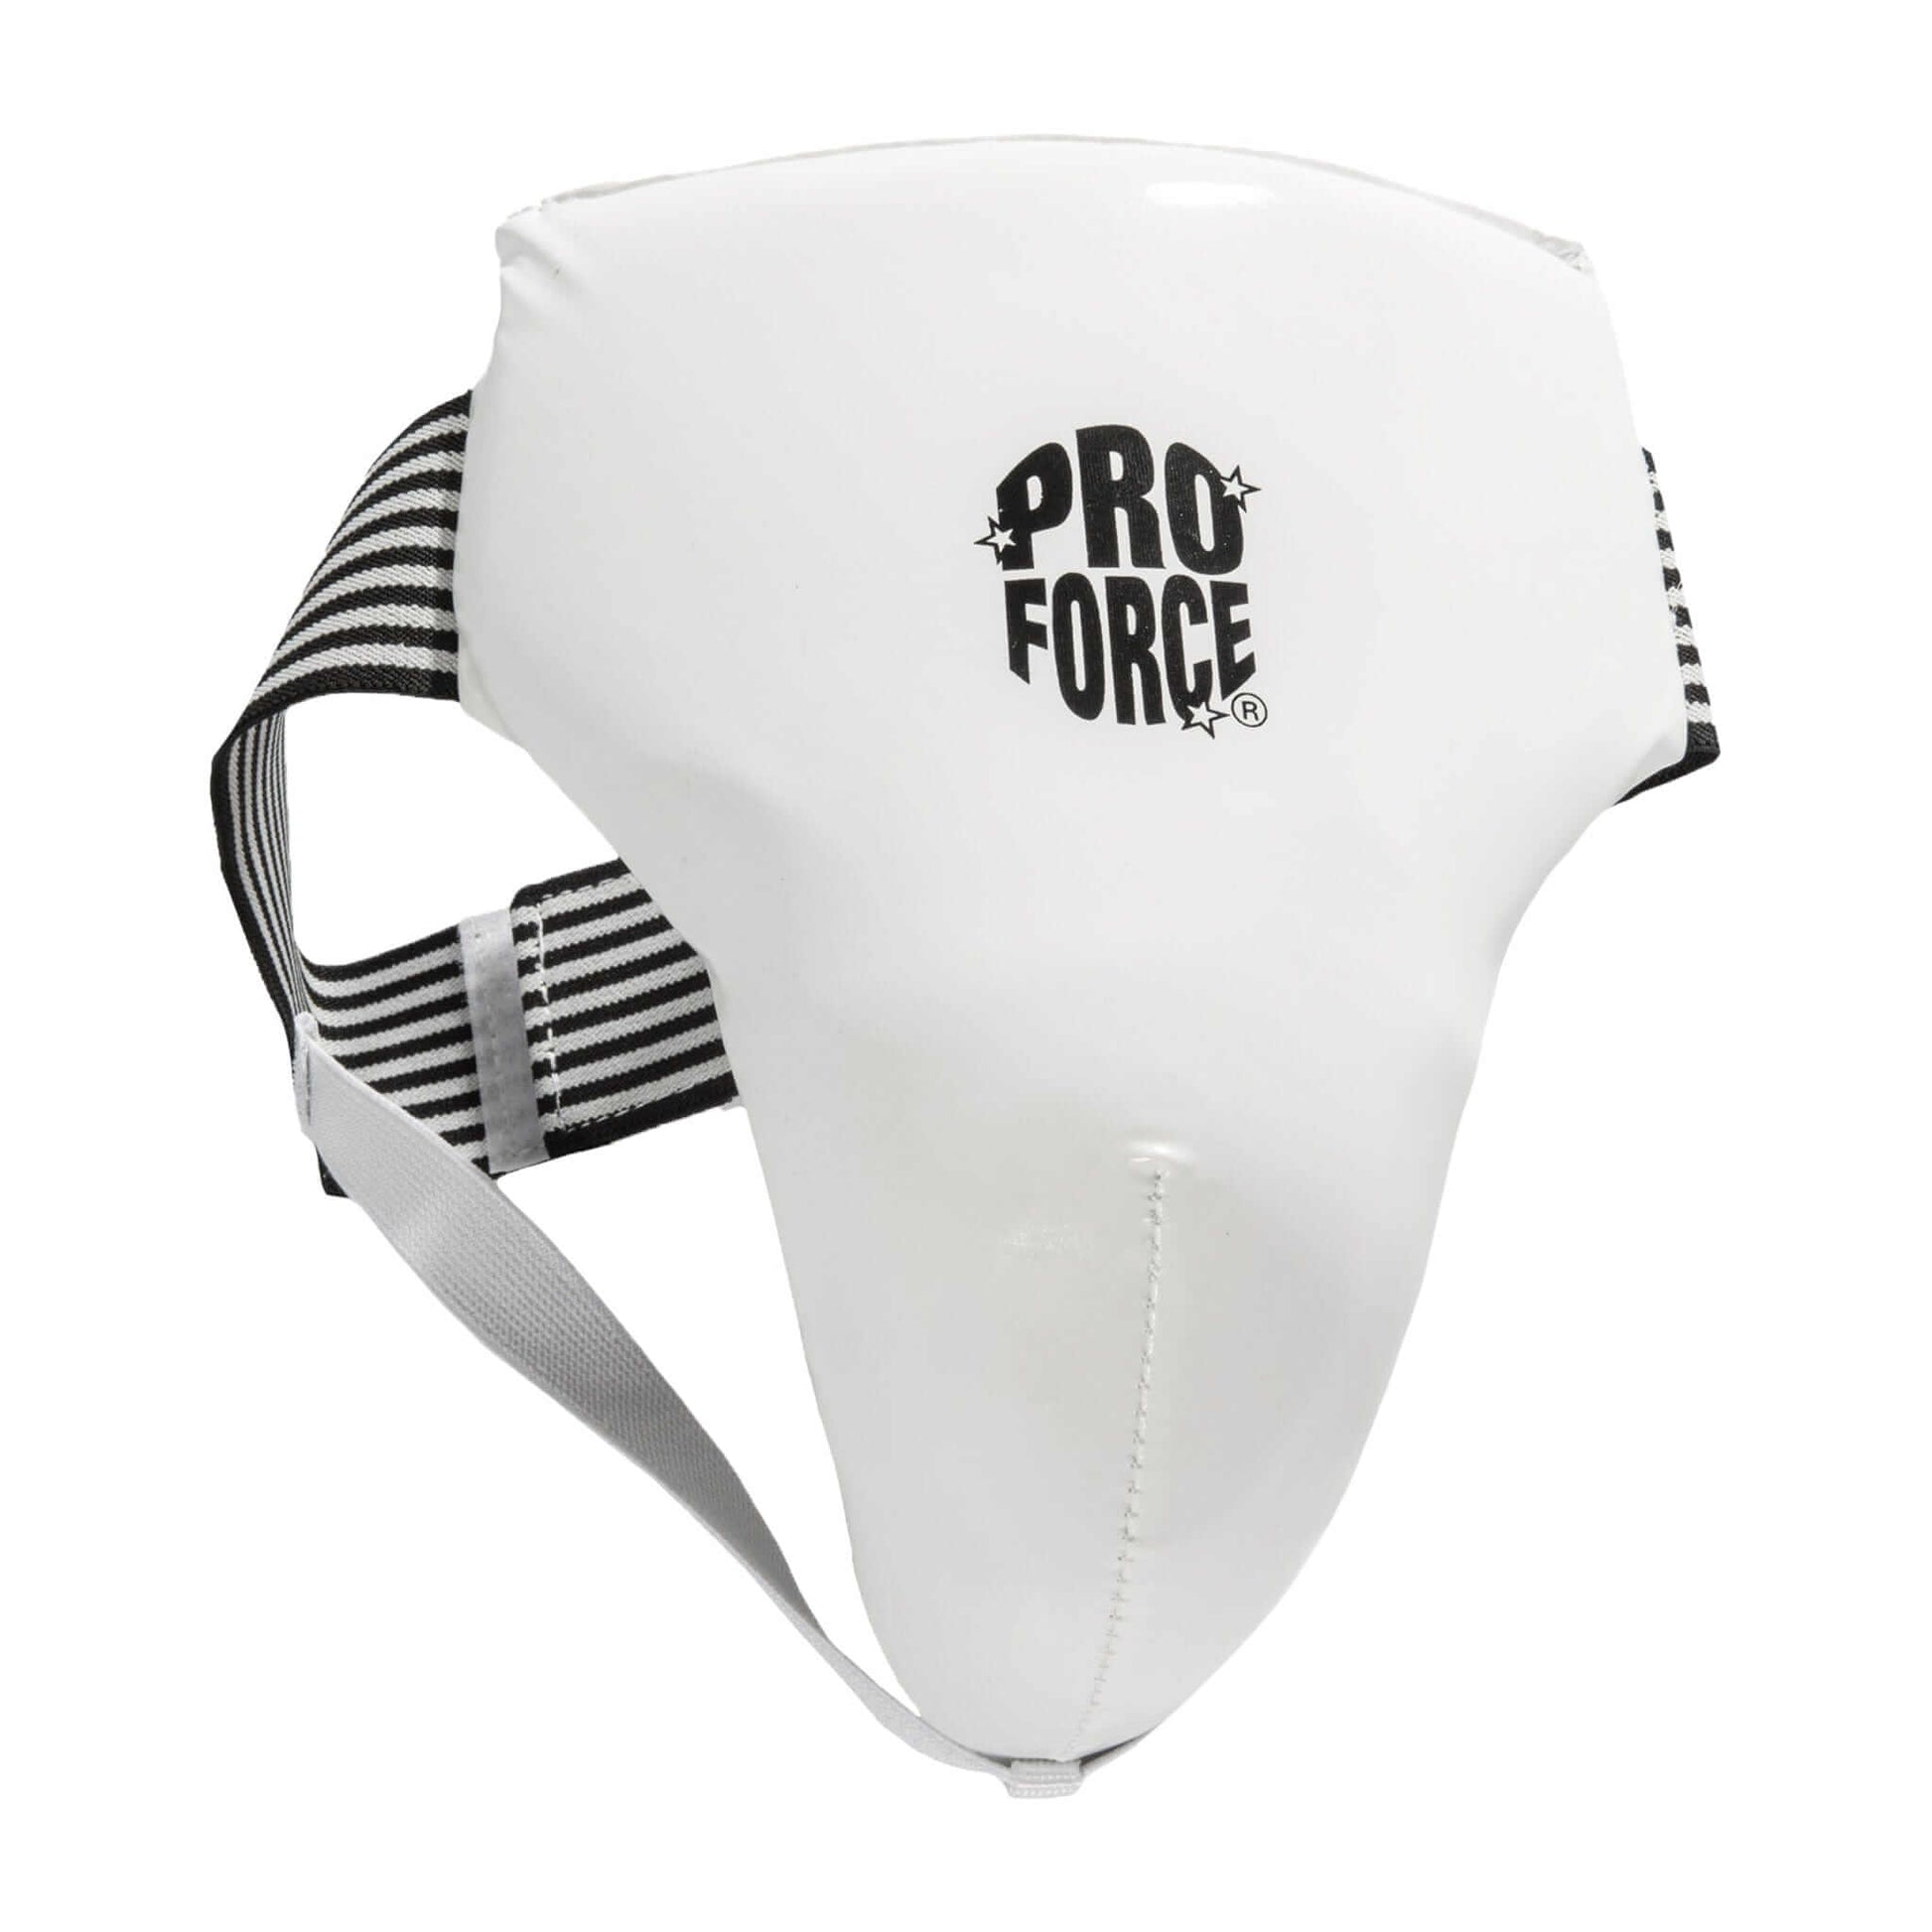 ProForce sporting goods x-small ProForce II Male Tuck Under Cup Taekwondo Karate